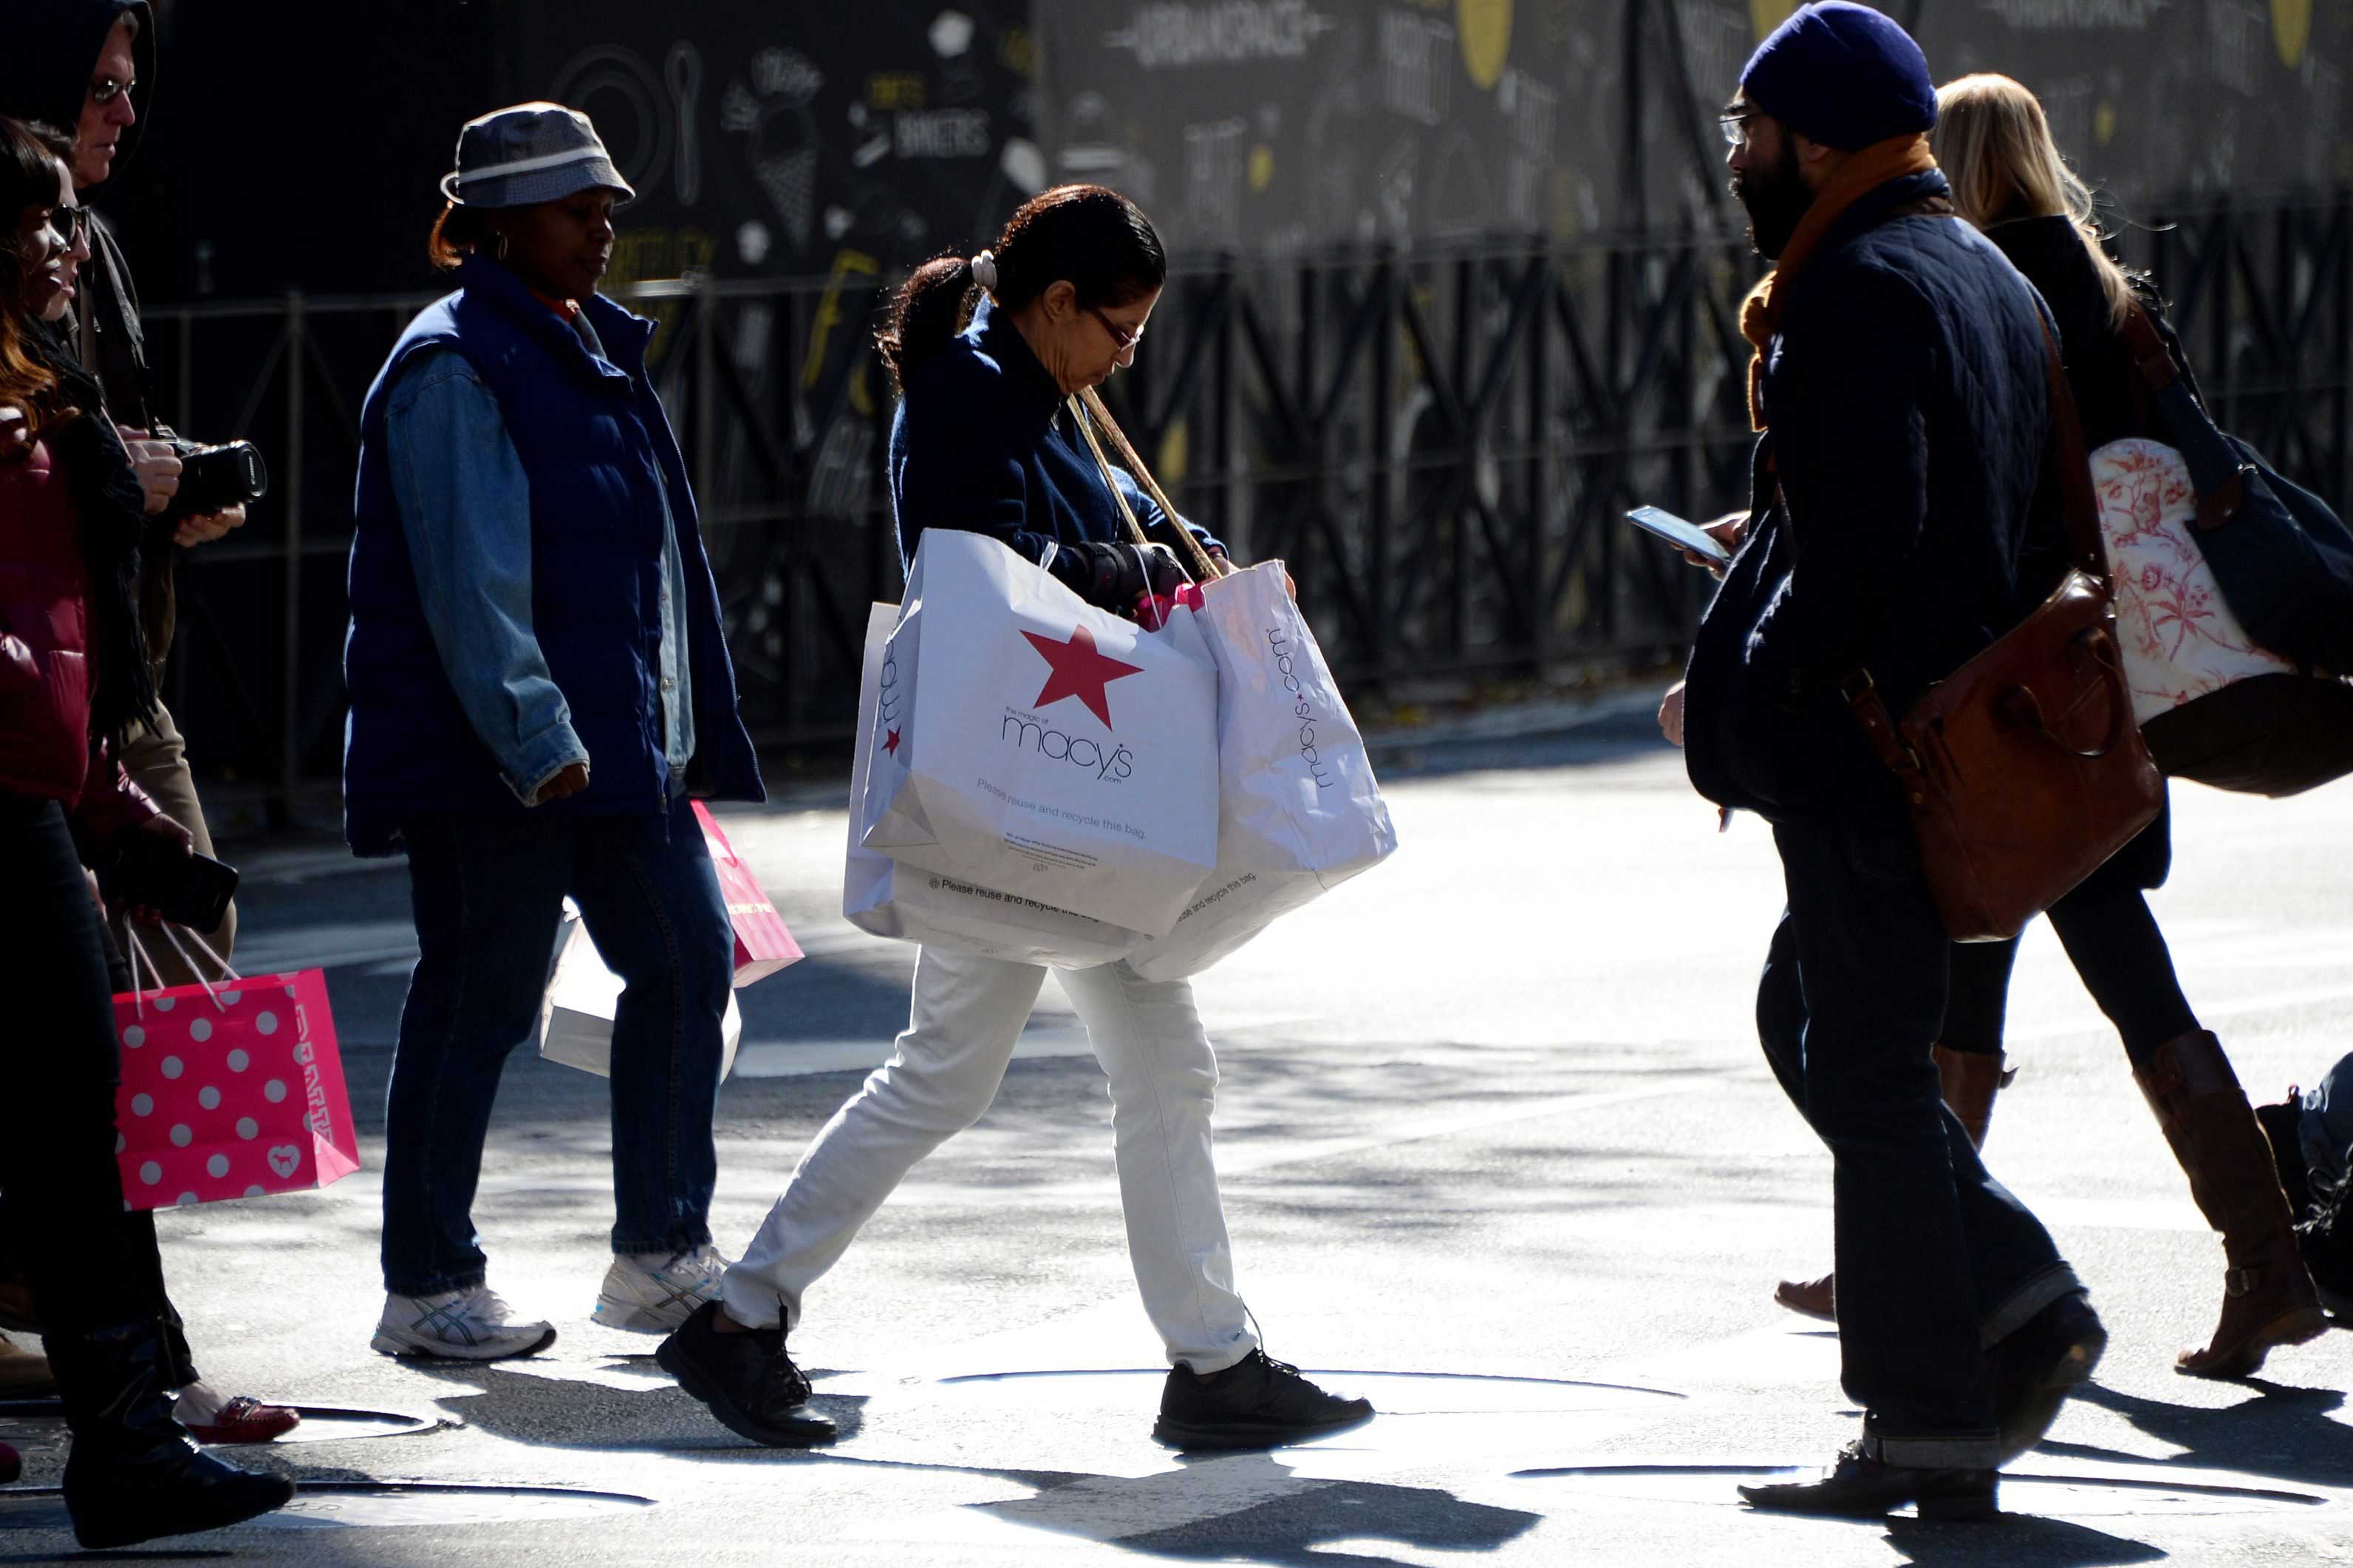 People carry shopping bags in New York, Nov. 14, 2014. (Justin Lange—EPA)